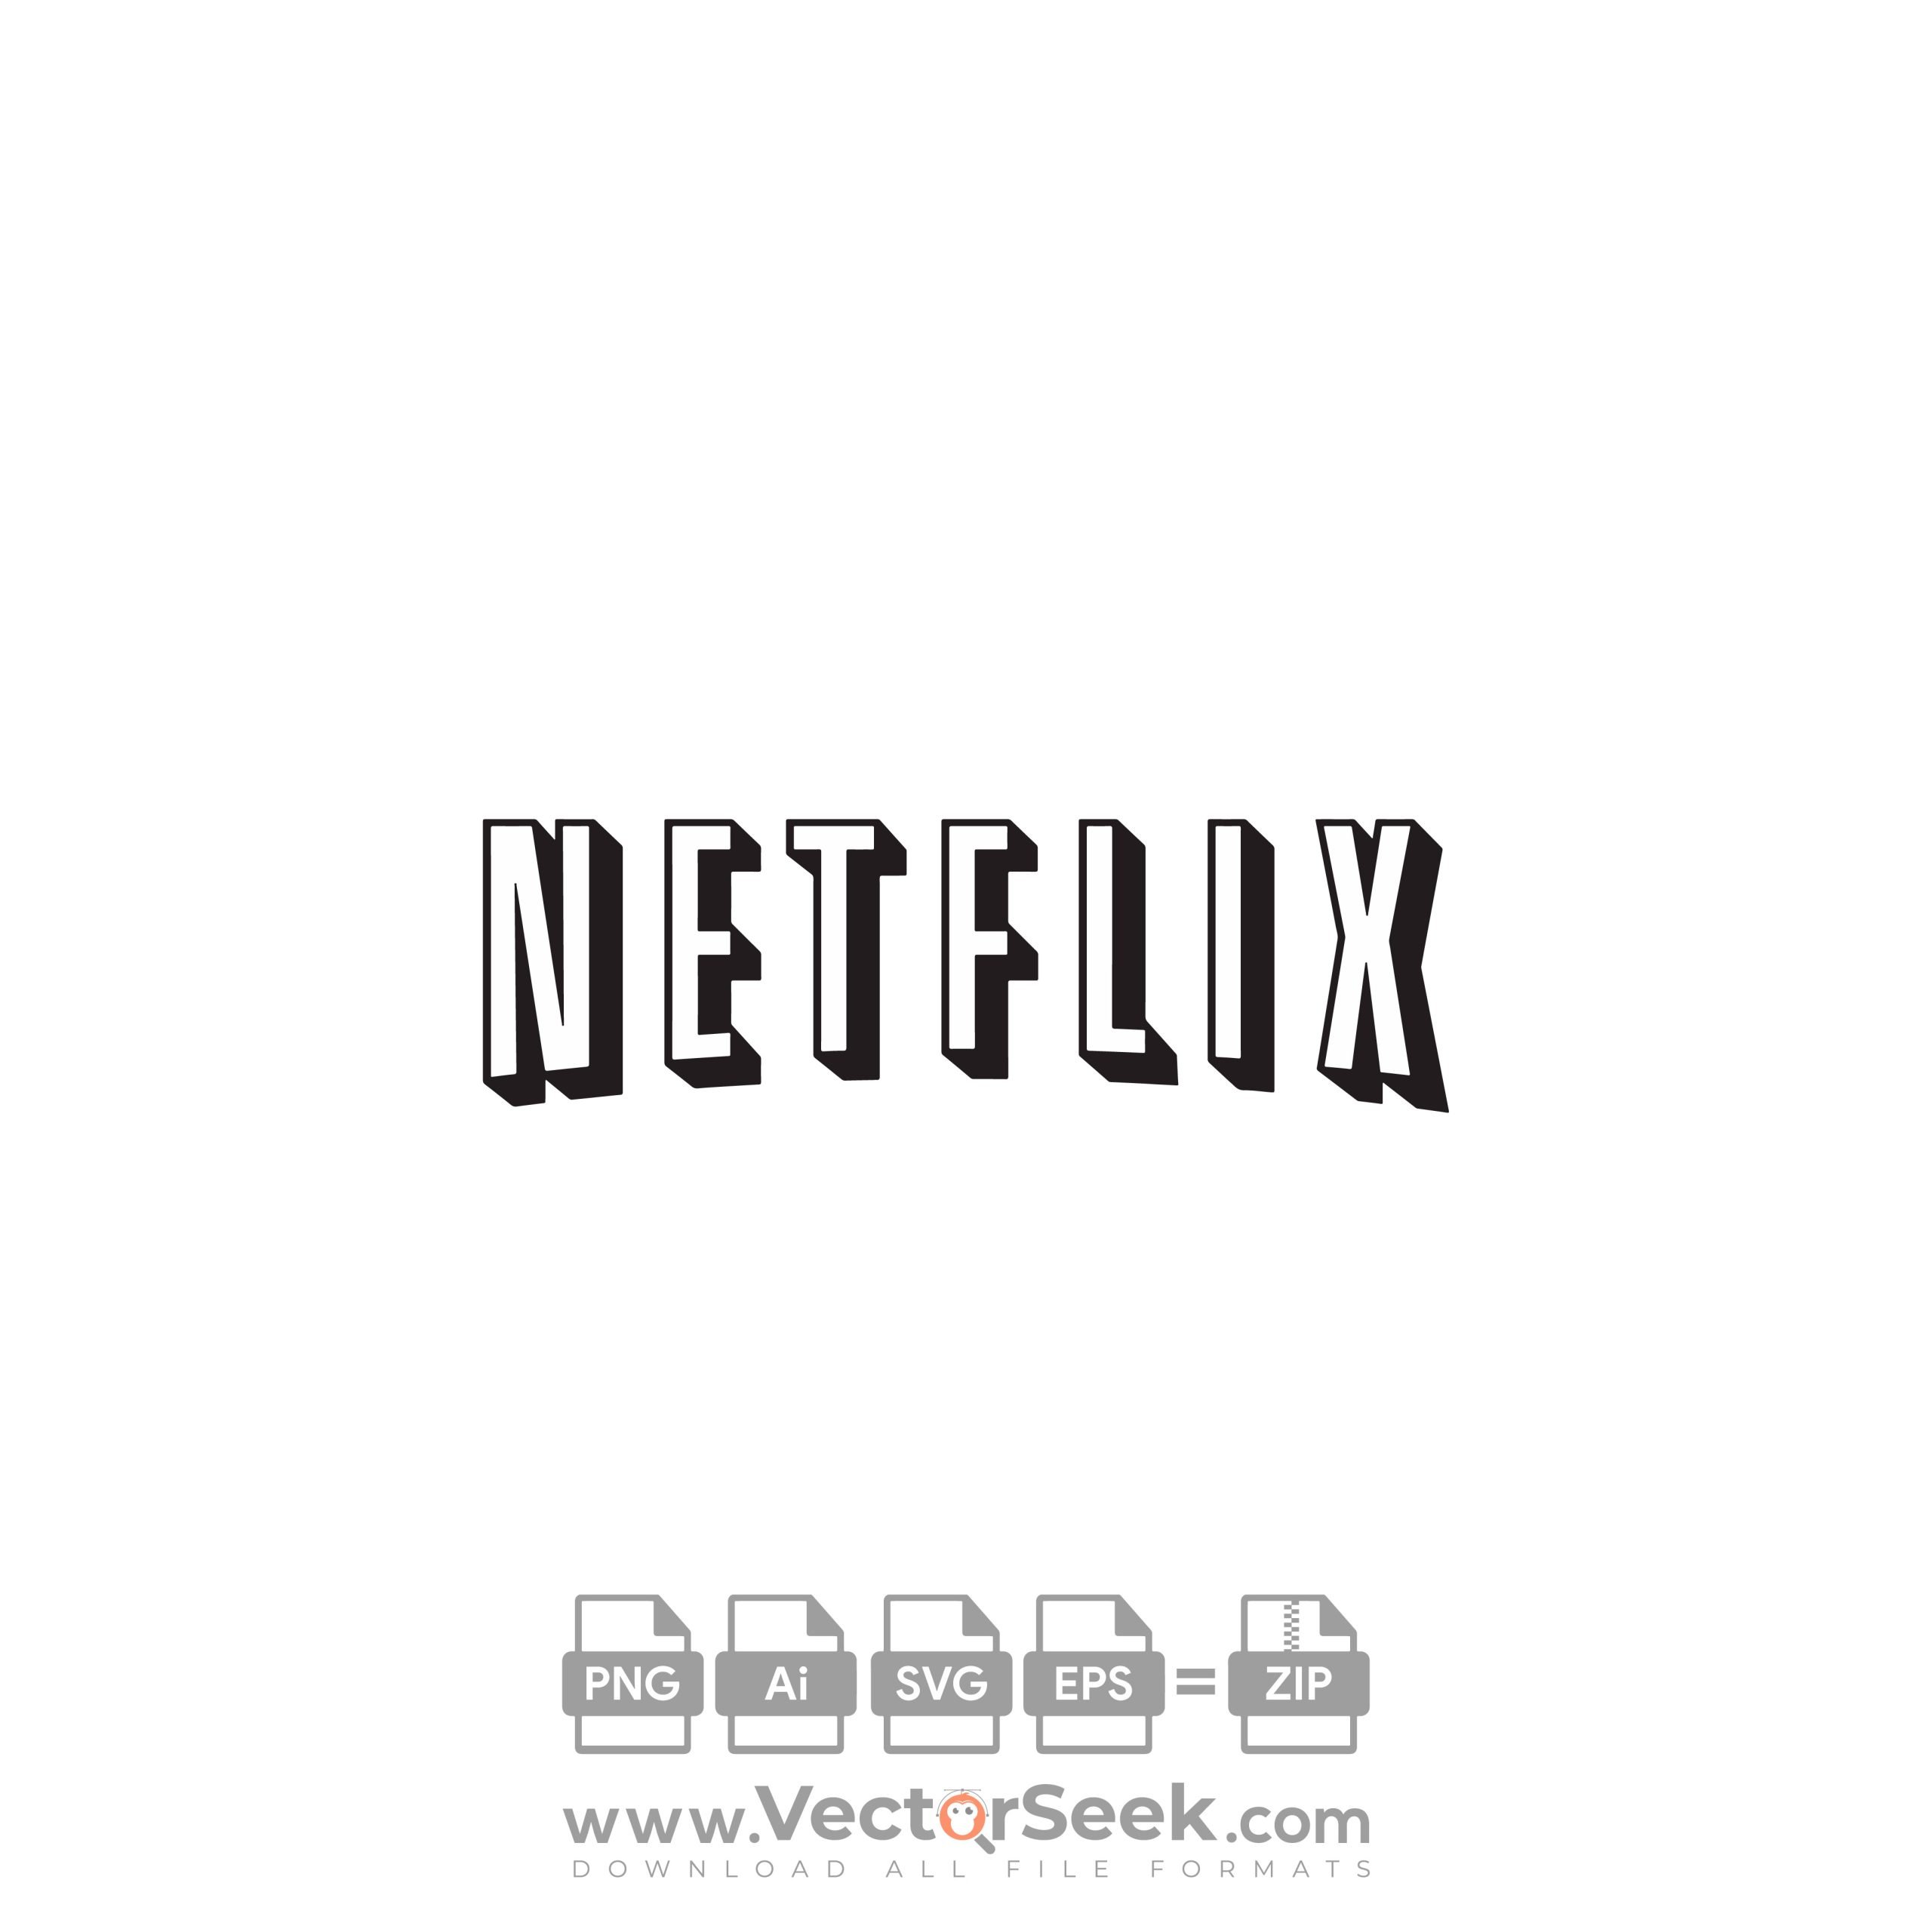 Netflix logo PNG transparent image download, size: 930x293px